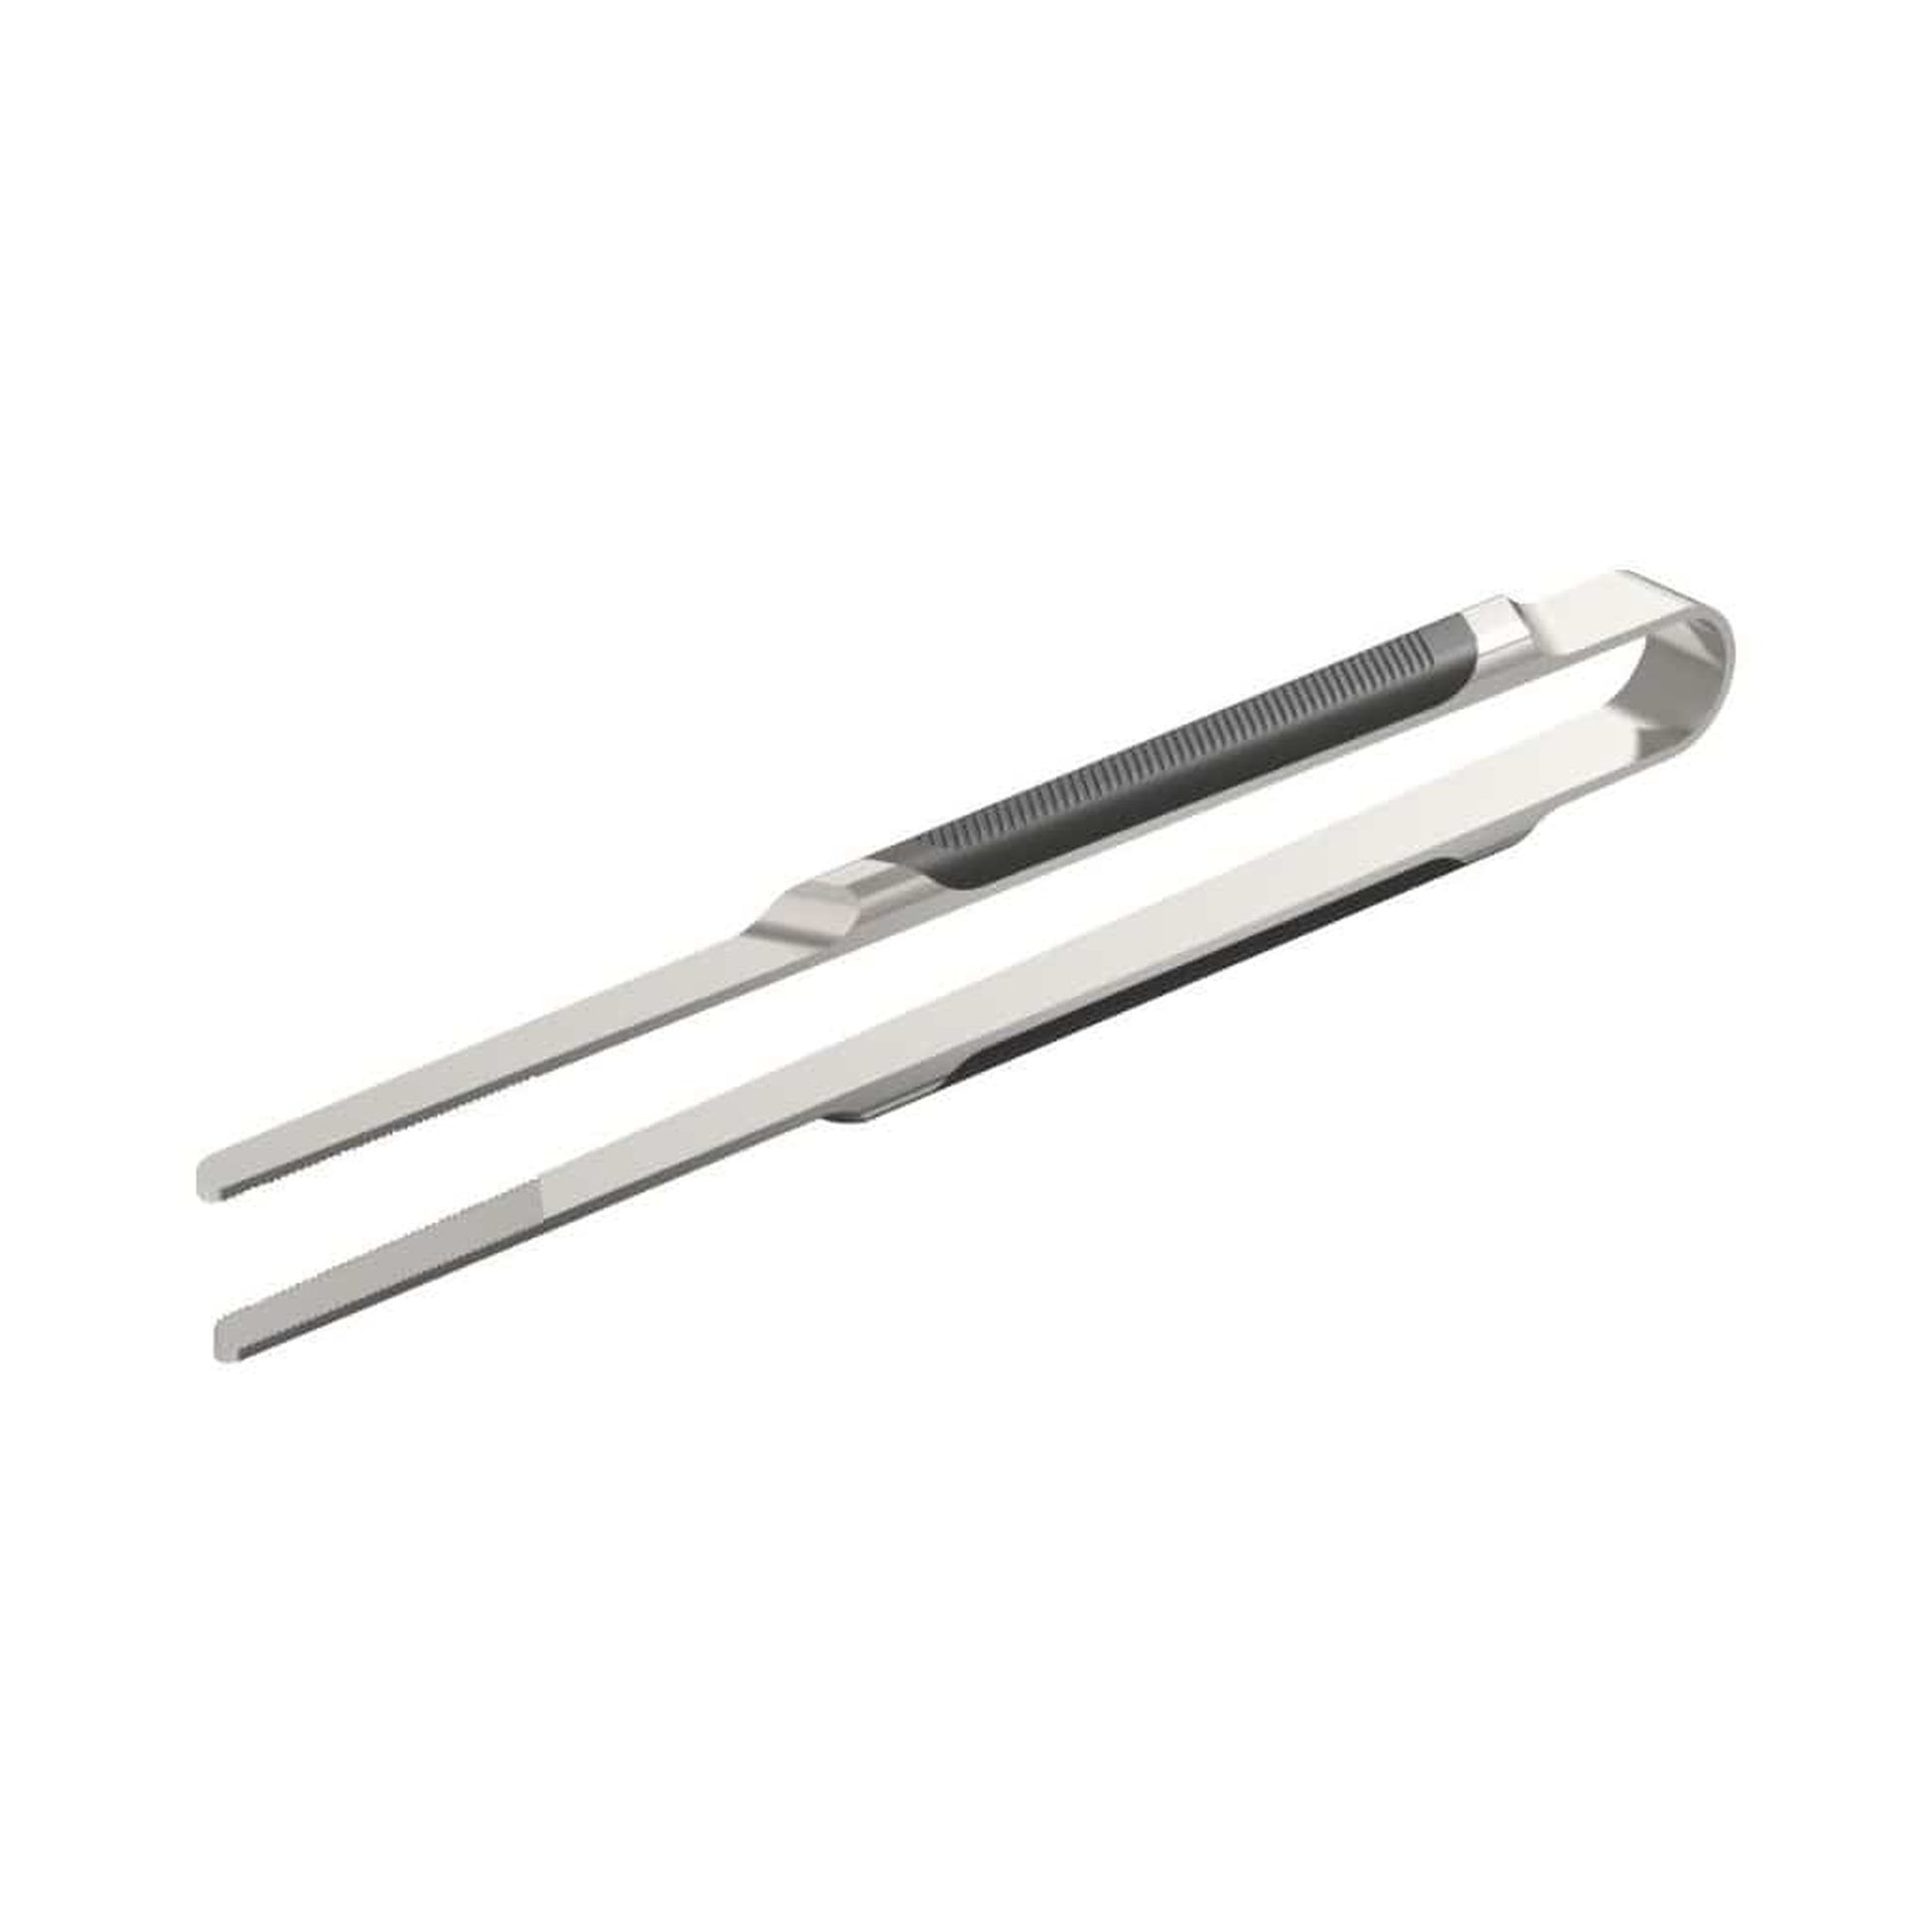 Everdure Medium Premium Stainless Steel Tweezers with Soft Grip